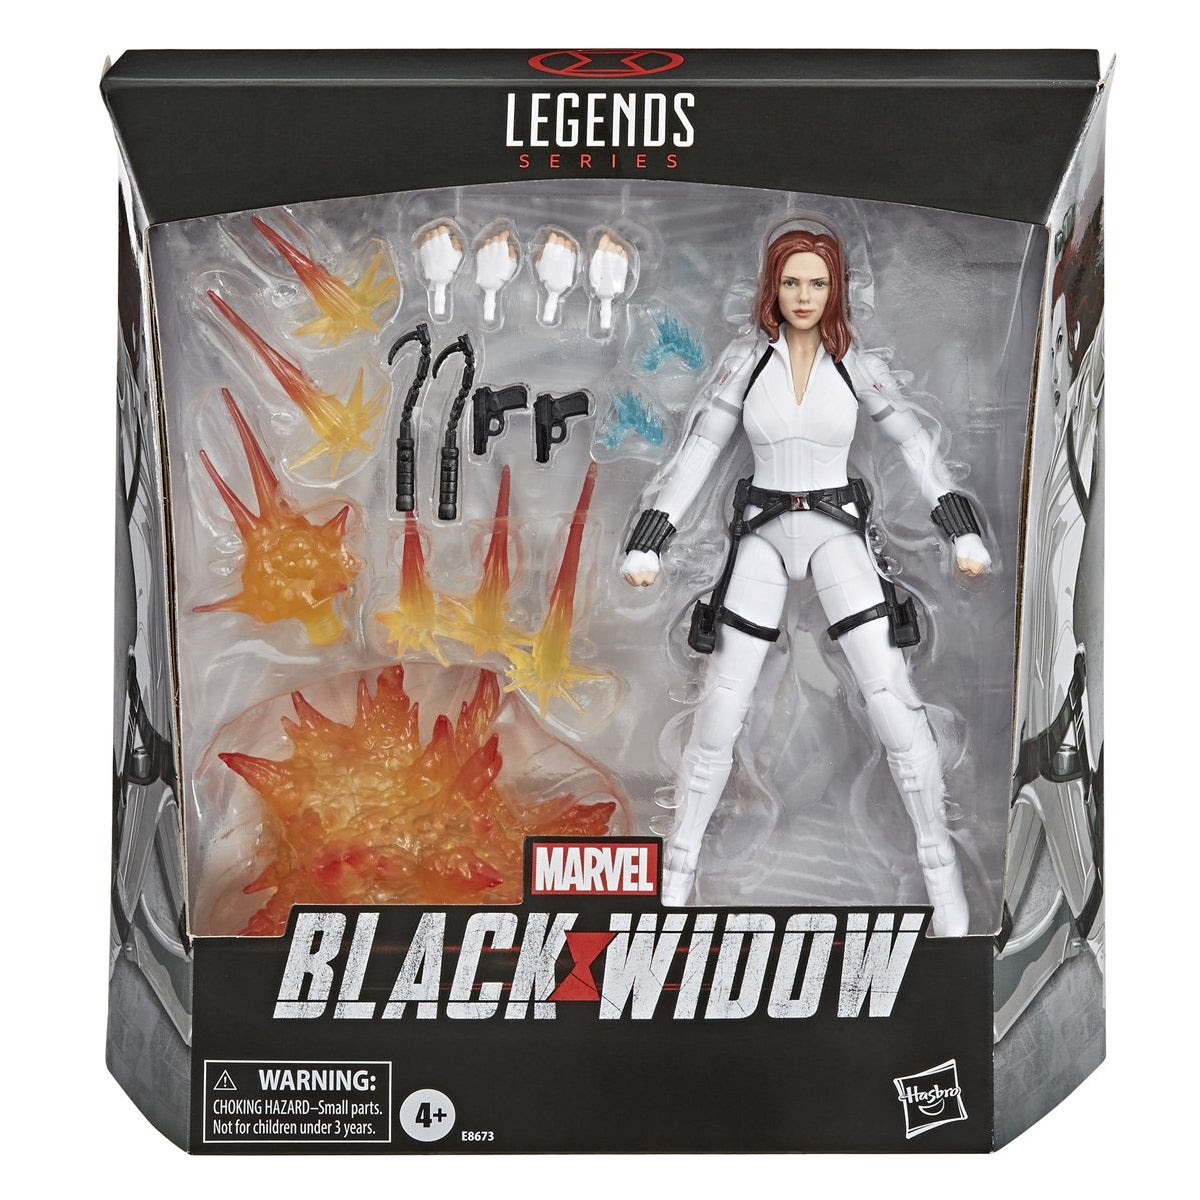 Image of Marvel Legends Deluxe Black Widow Movie Figure by Hasbro